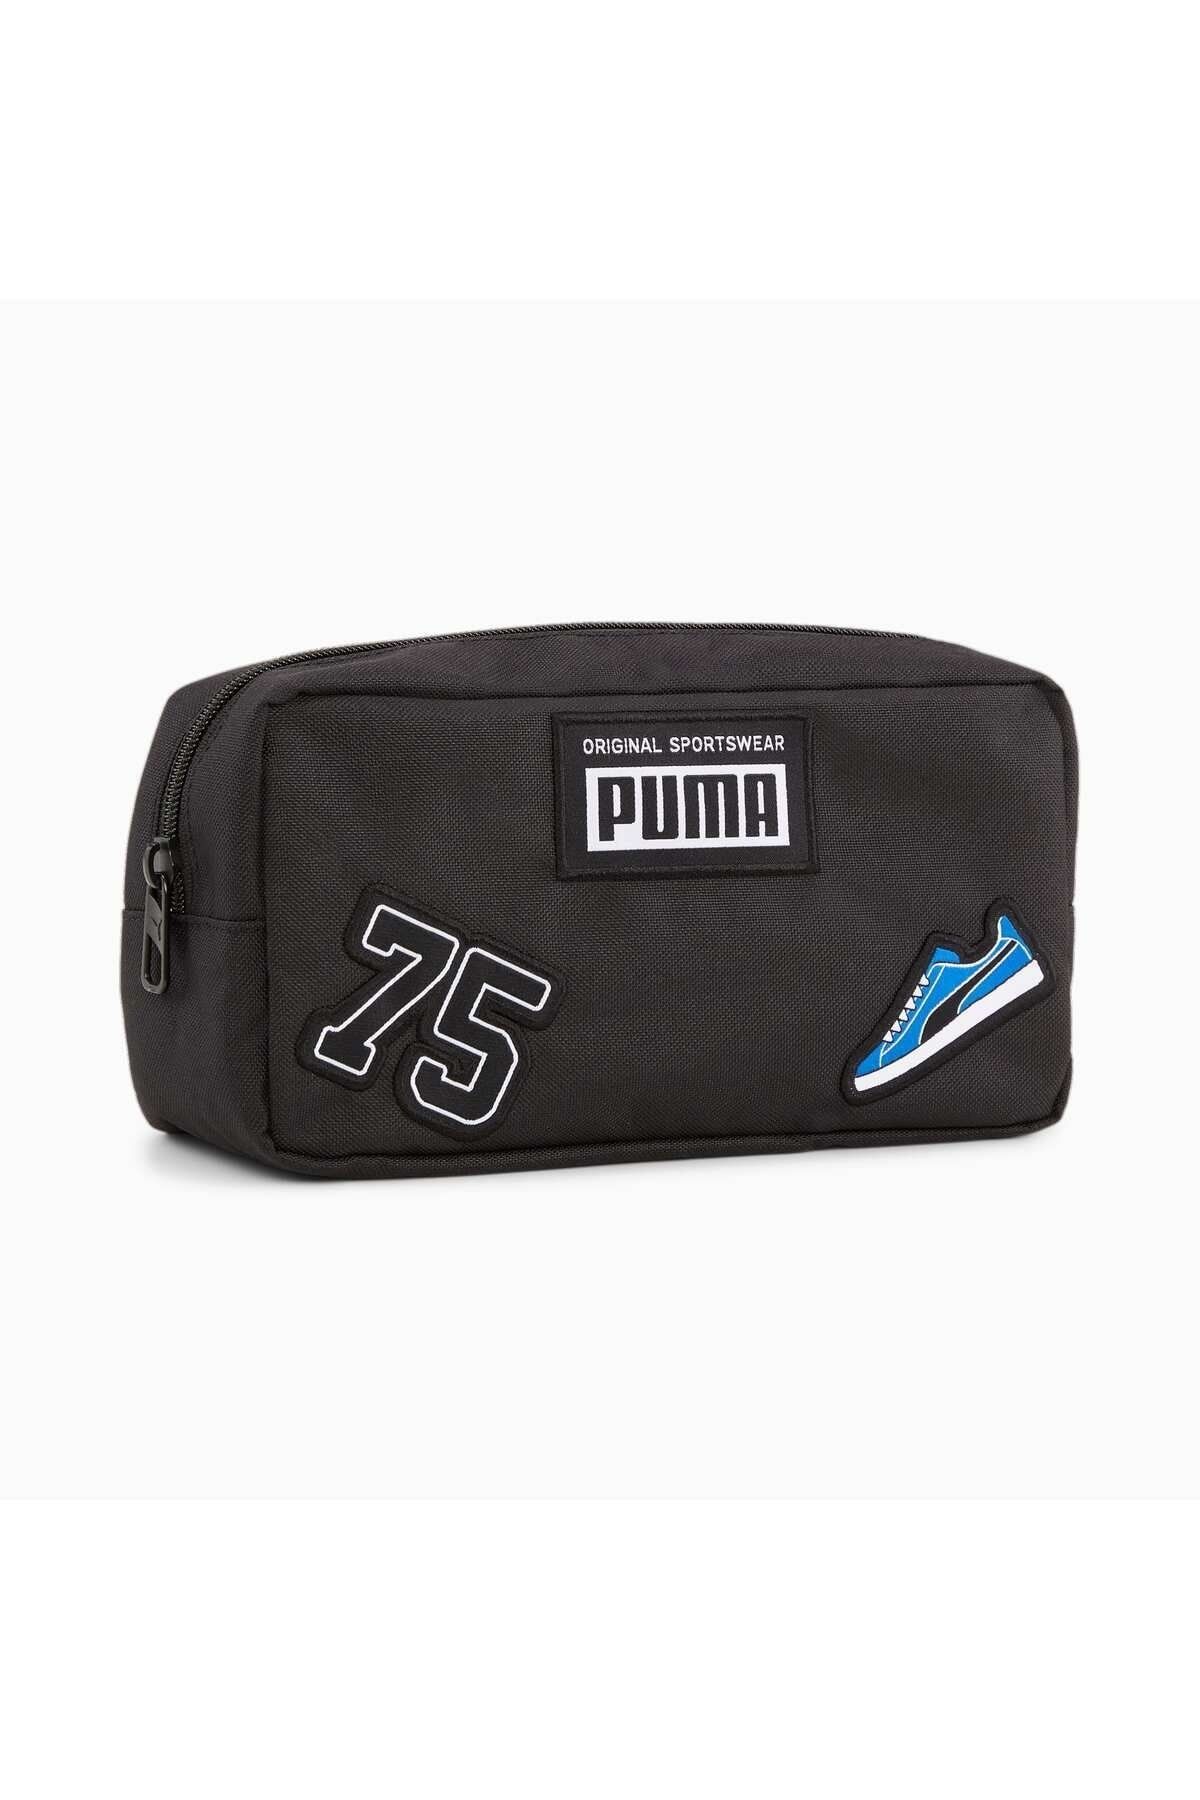 Puma Patch Pencil Case